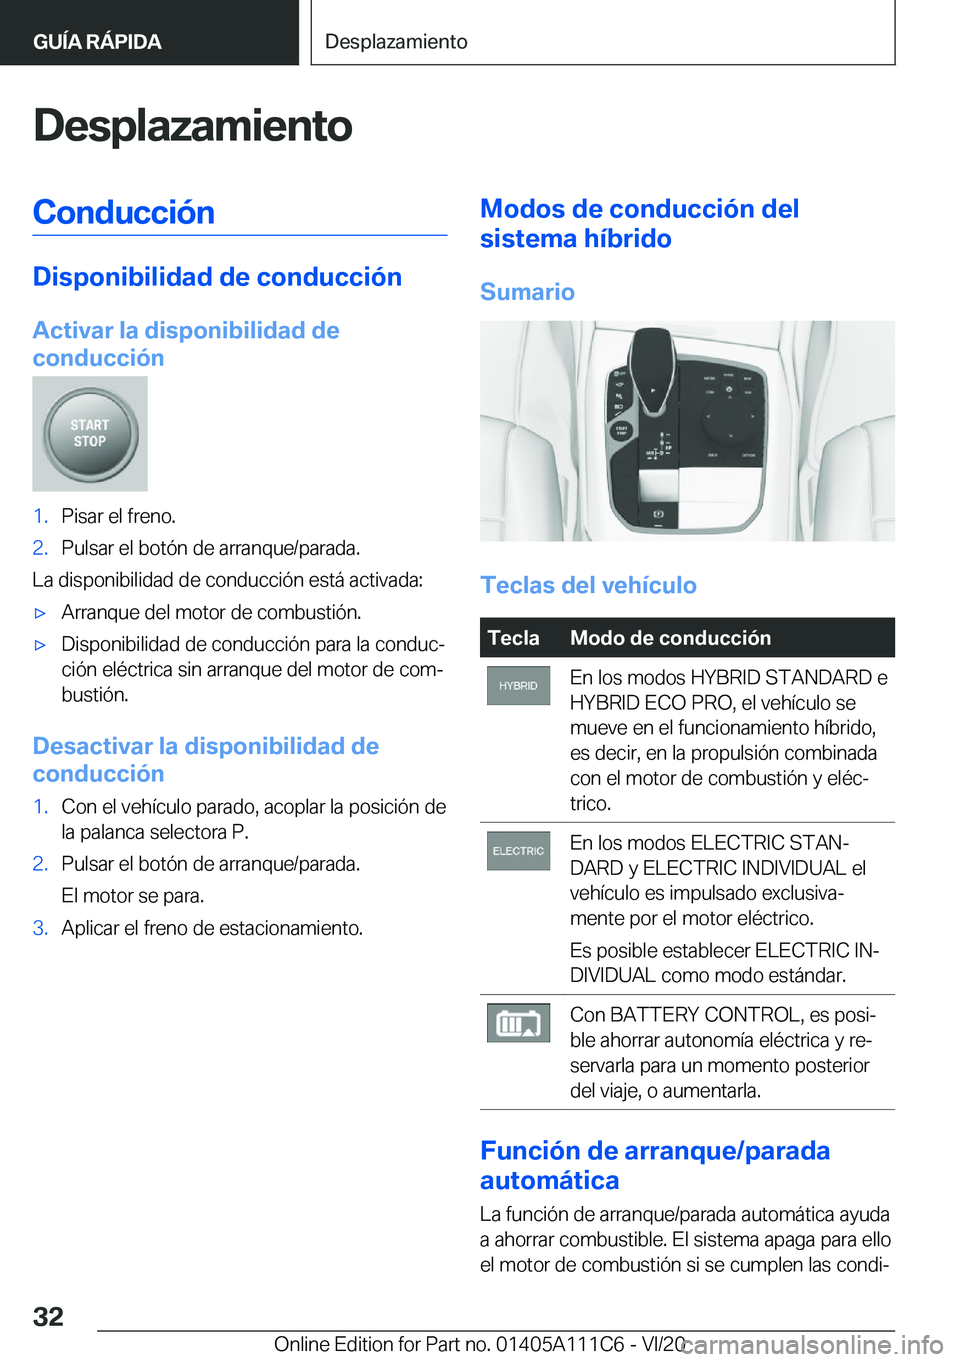 BMW 3 SERIES SEDAN PLUG-IN HYBRID 2021  Manuales de Empleo (in Spanish) �D�e�s�p�l�a�z�a�m�i�e�n�t�o�C�o�n�d�u�c�c�i�